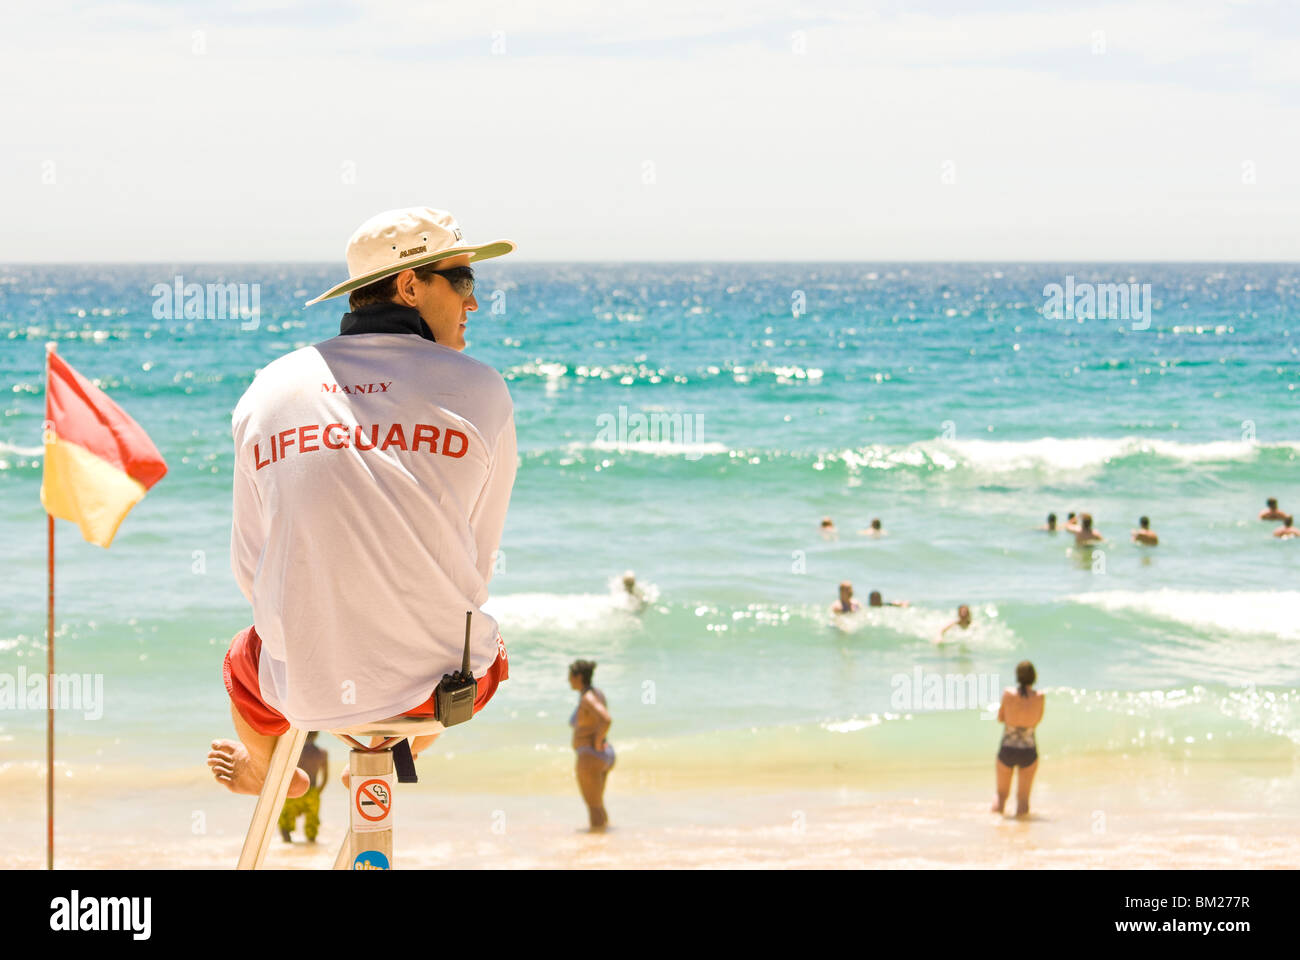 Manly lifeguard Stock Photo